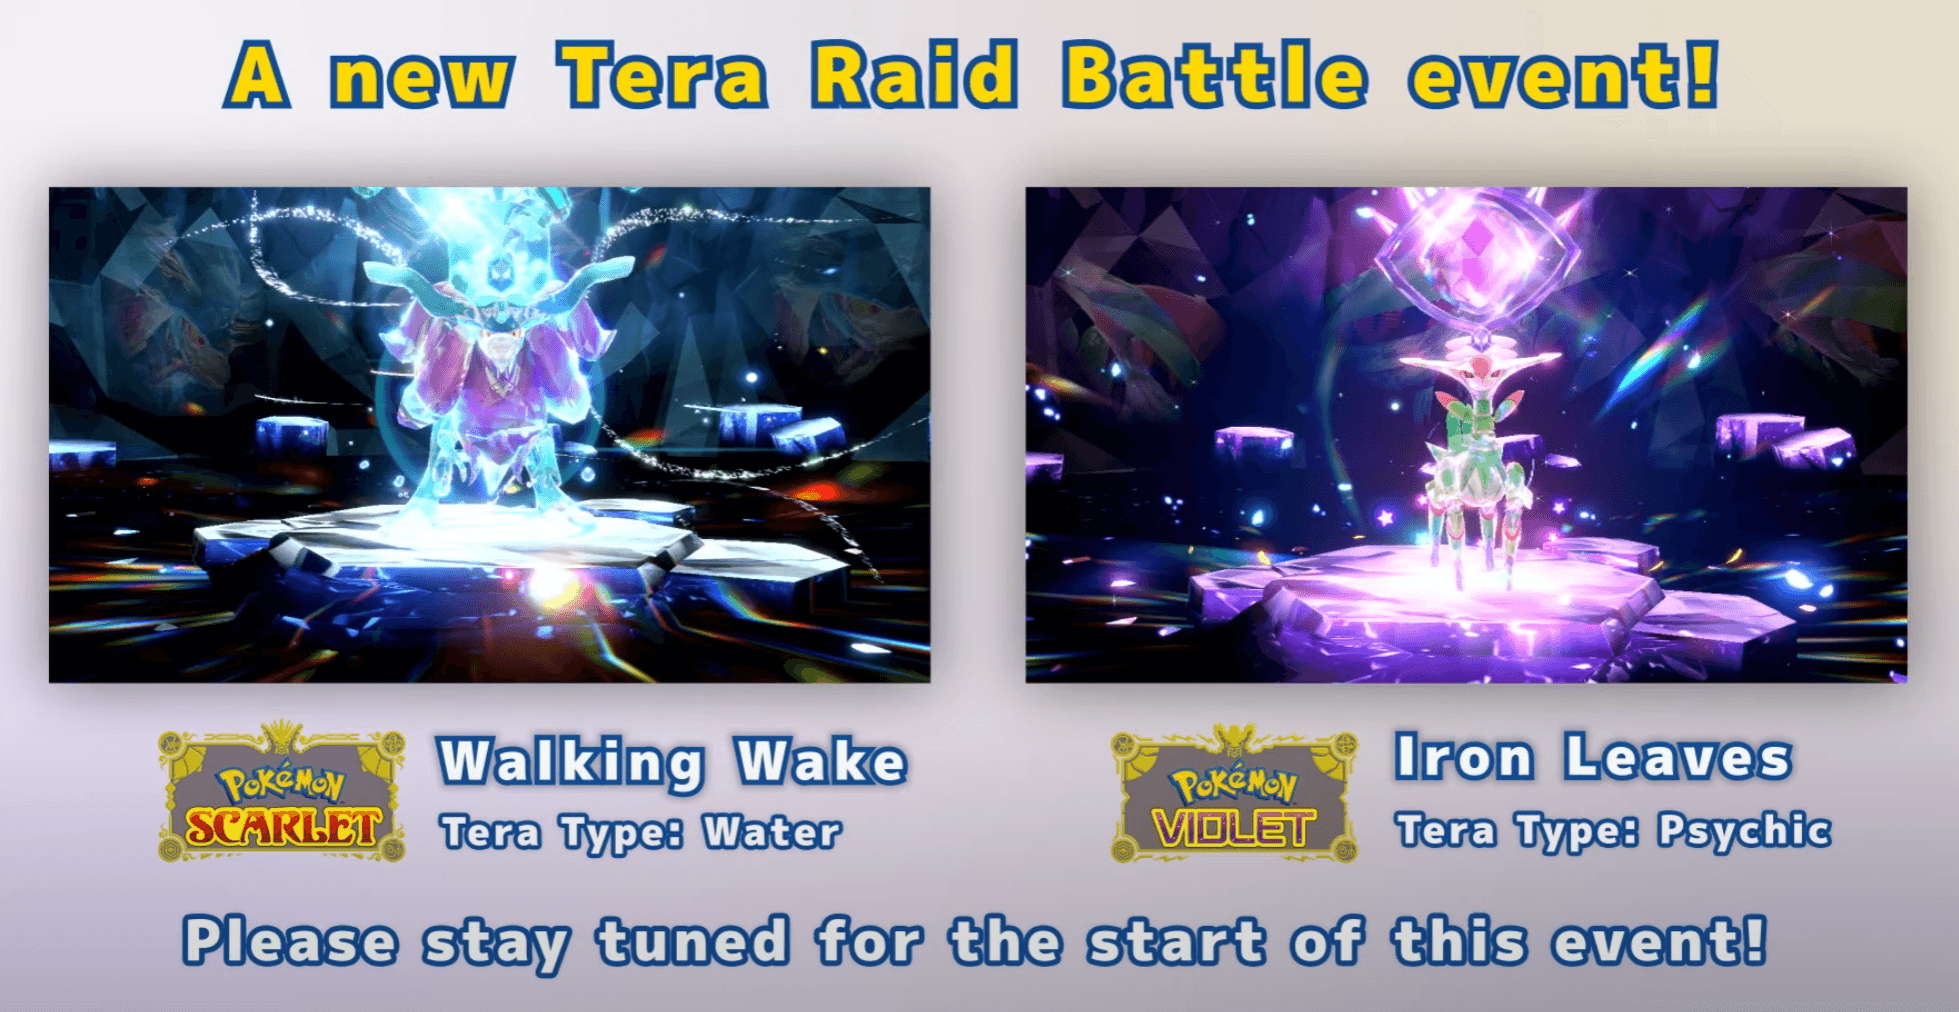 Walking Wake and Iron Leaves in their tera raid setting